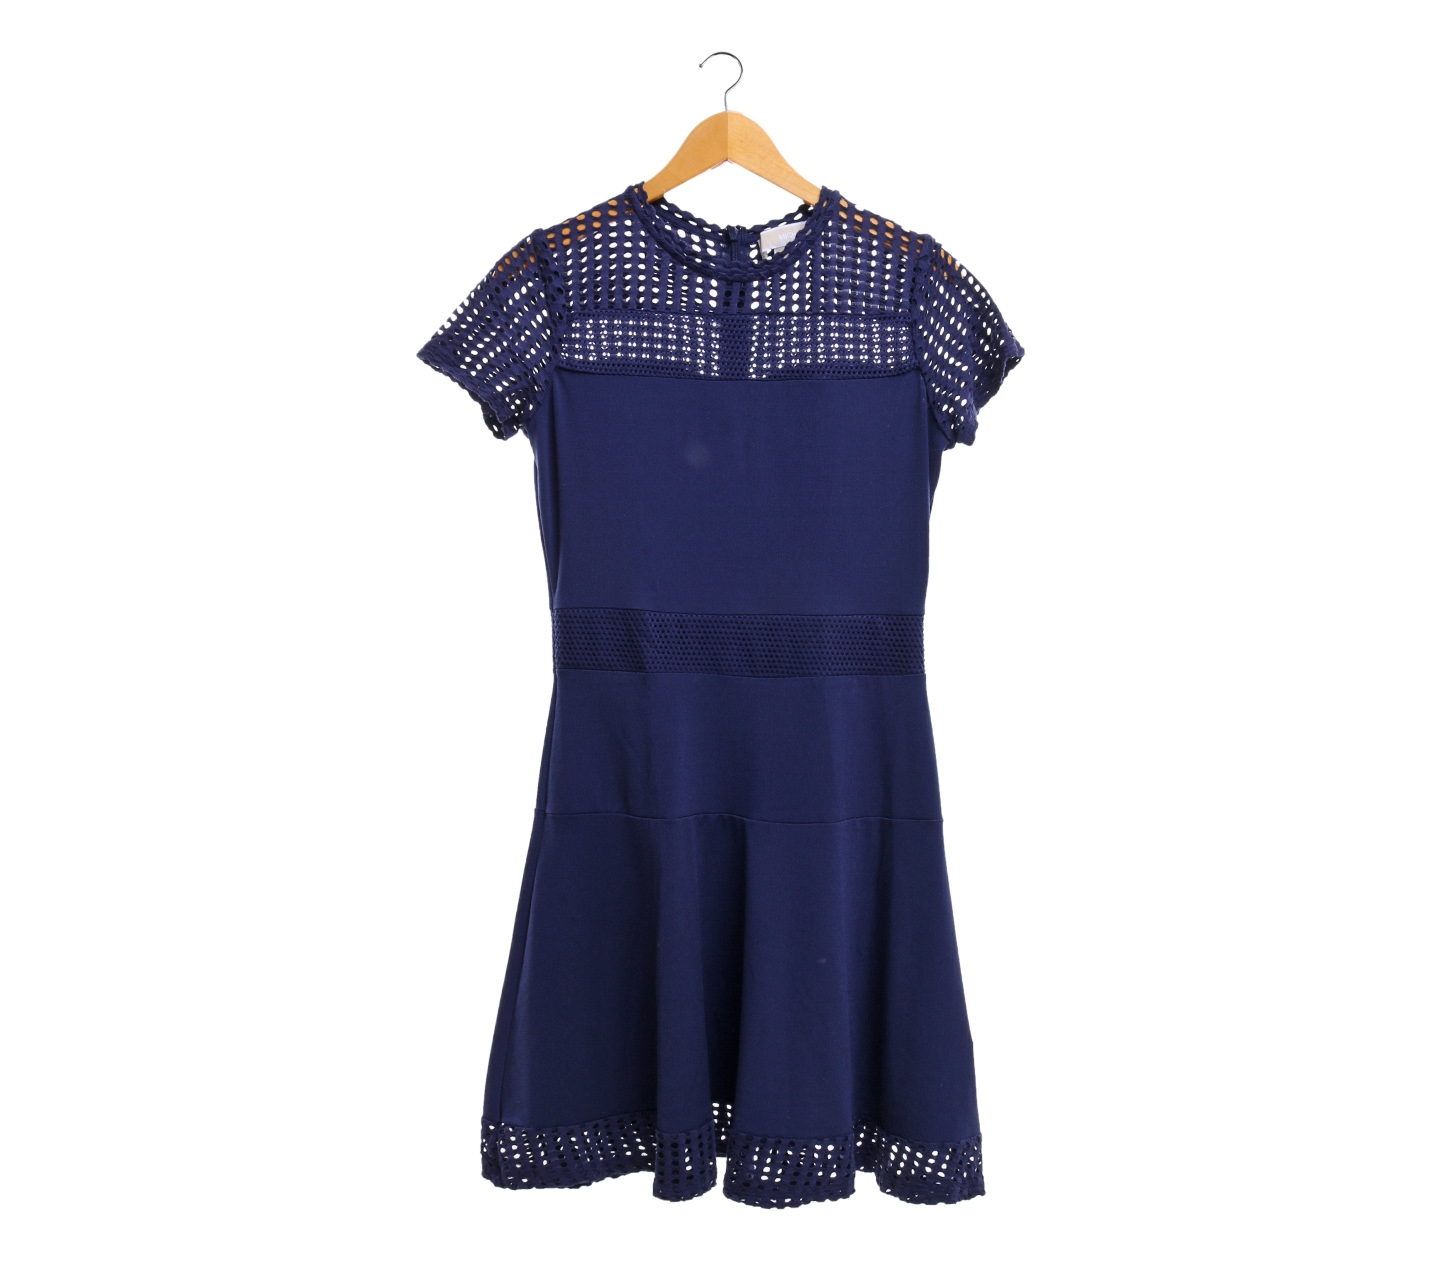 Michael Kors Dark Blue Perforated Mini Dress